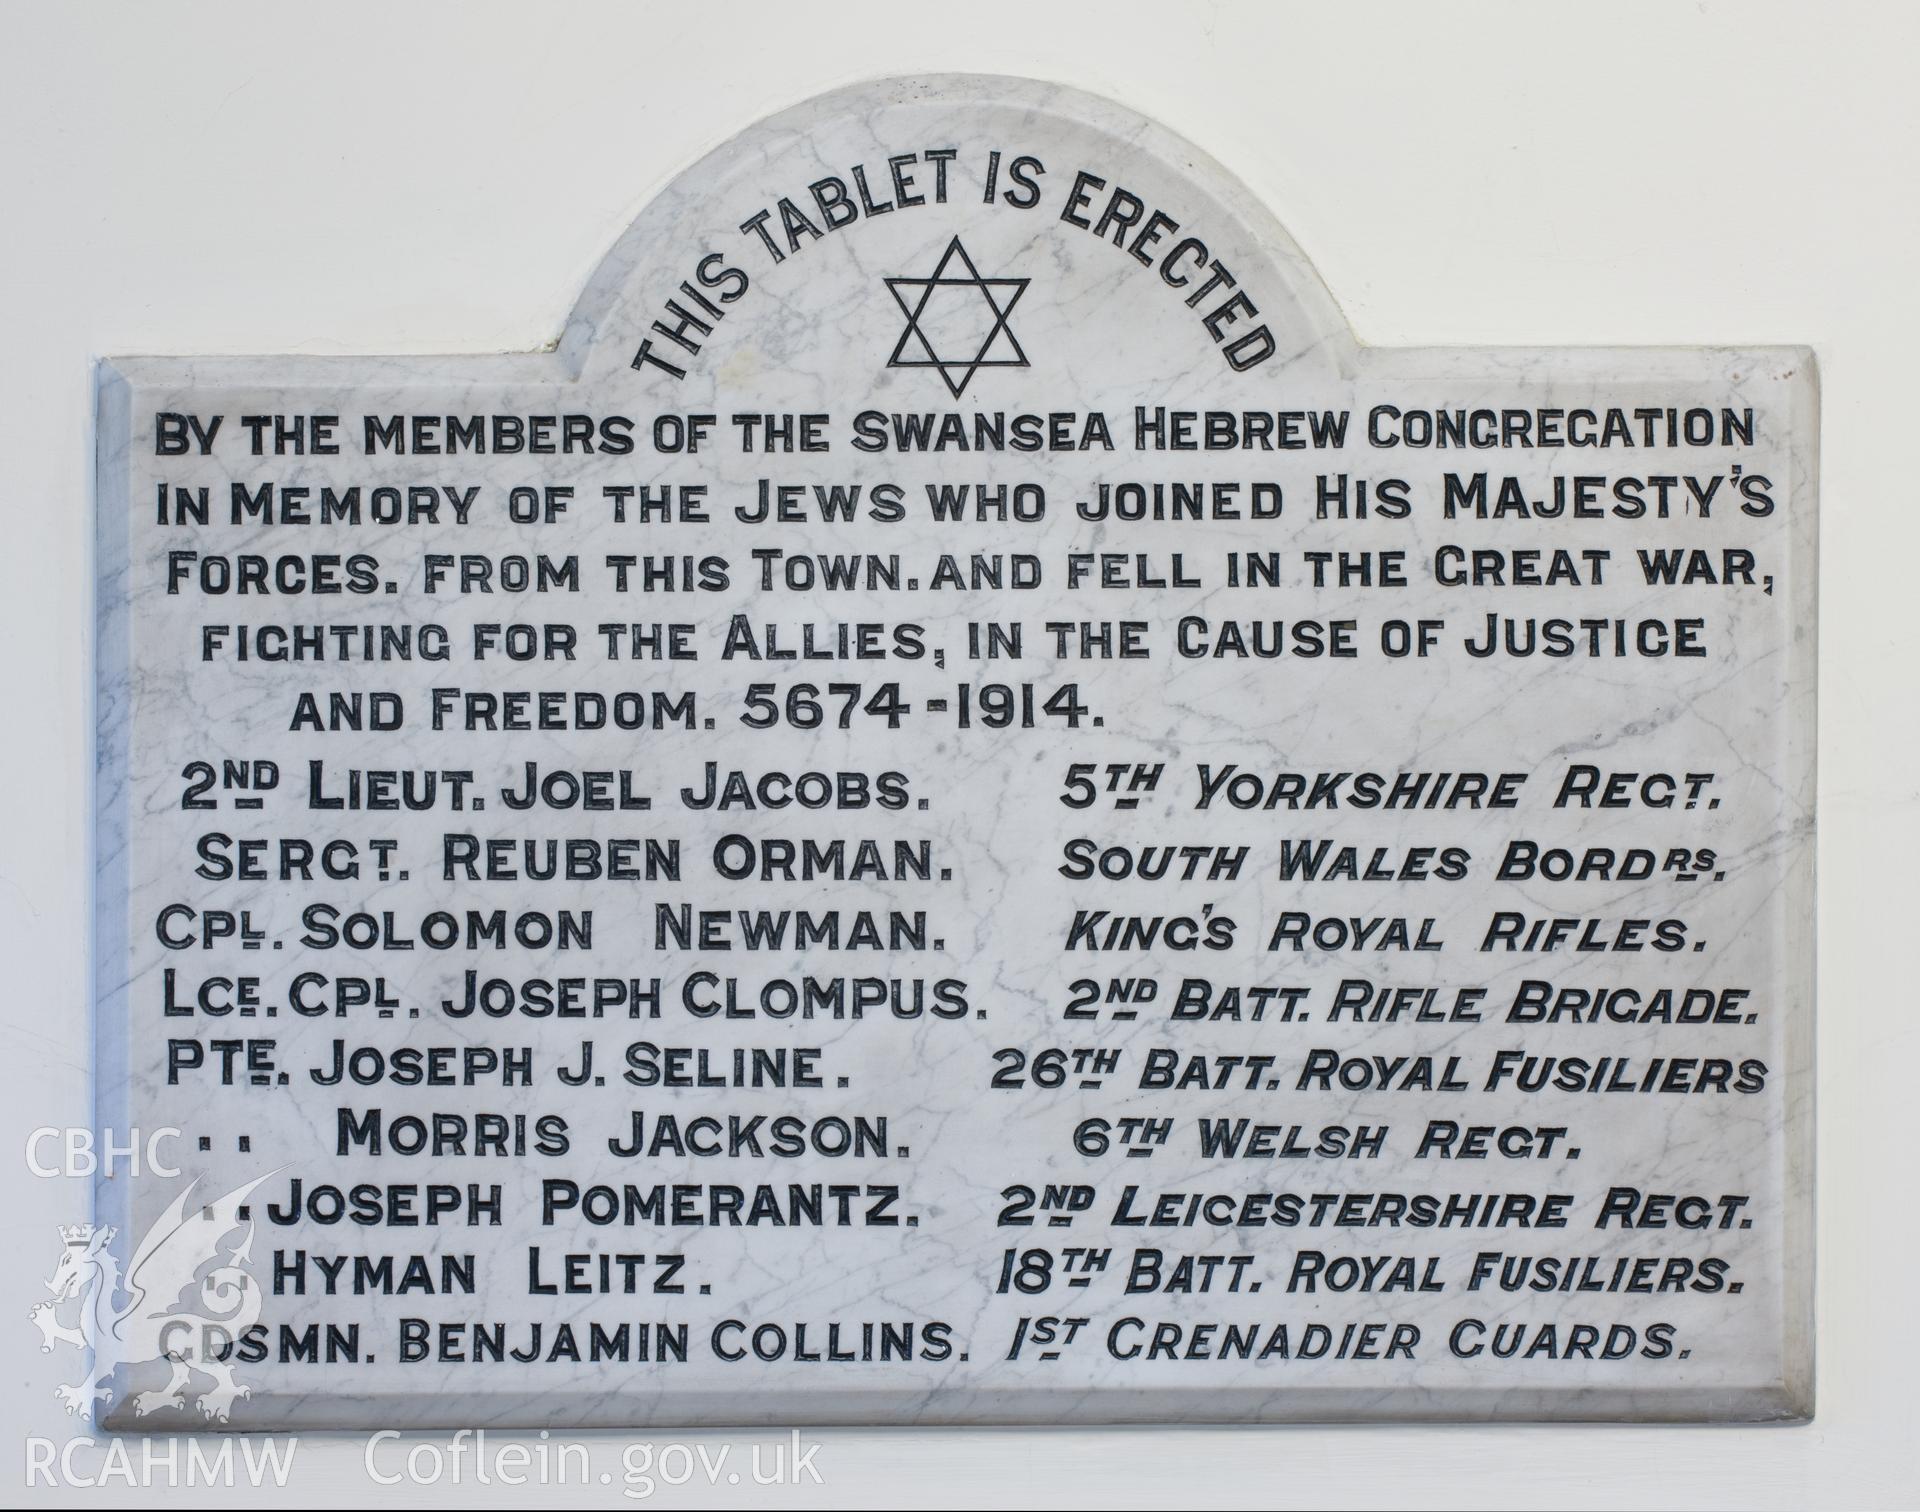 1914 war memorial to Swansea Hebrew Congregation.